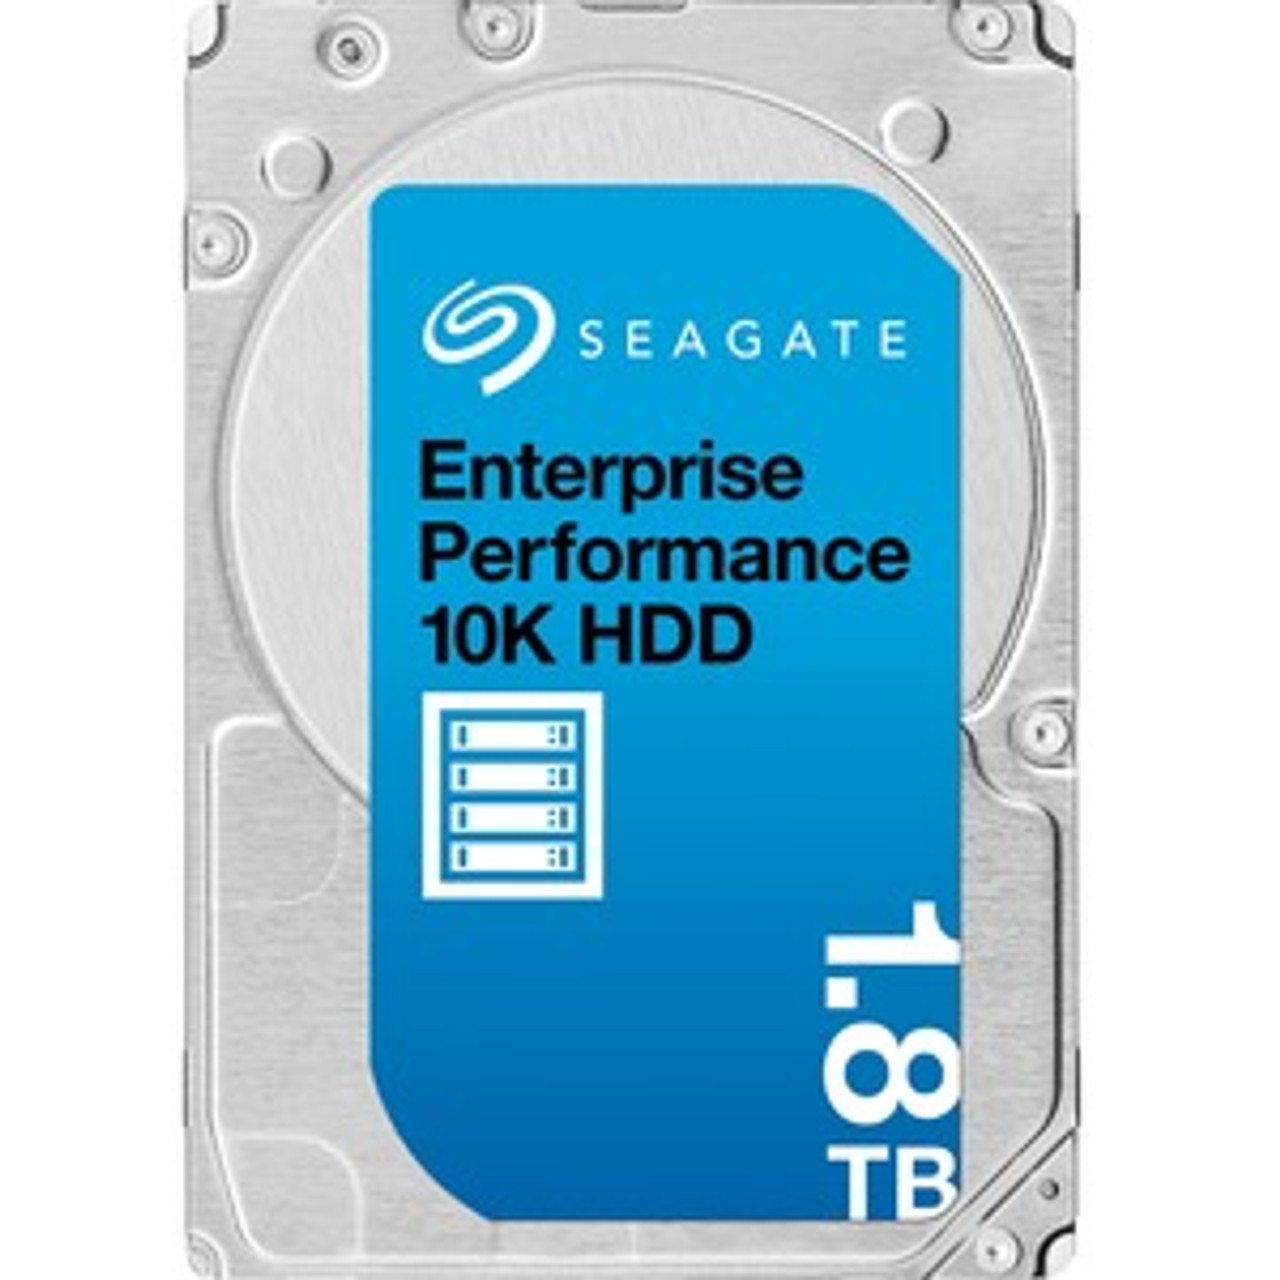 ST1800MM0129-40PK Seagate Enterprise Performance 10K 1.8TB 10000RPM SAS 12Gbps 256MB Cache 16GB NAND SSD (512e) 2.5-inch Internal Hybrid Hard Drive (40-Pack)